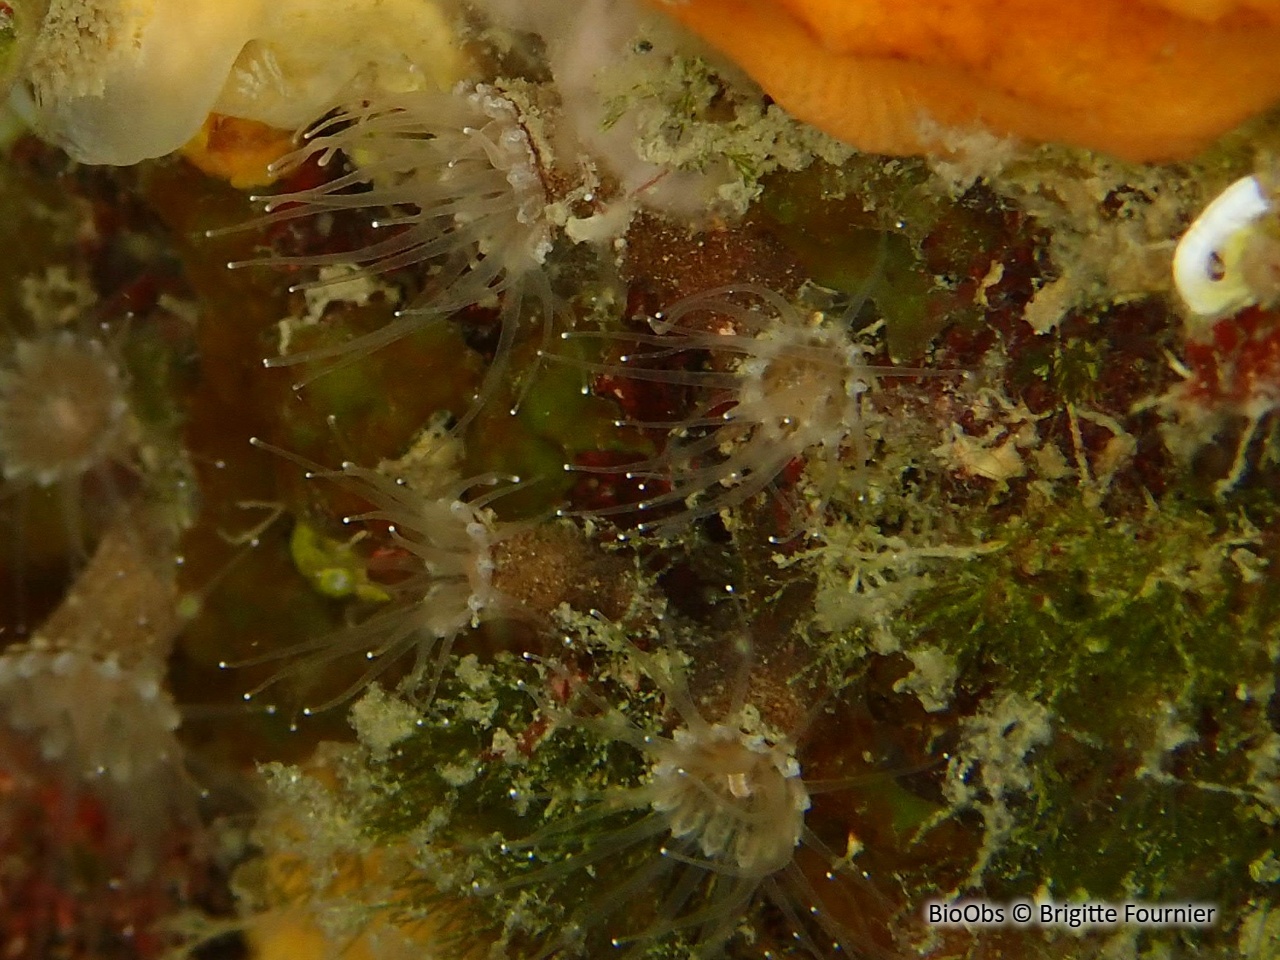 Anémone encroûtante grise - Epizoanthus paxii - Brigitte Fournier - BioObs